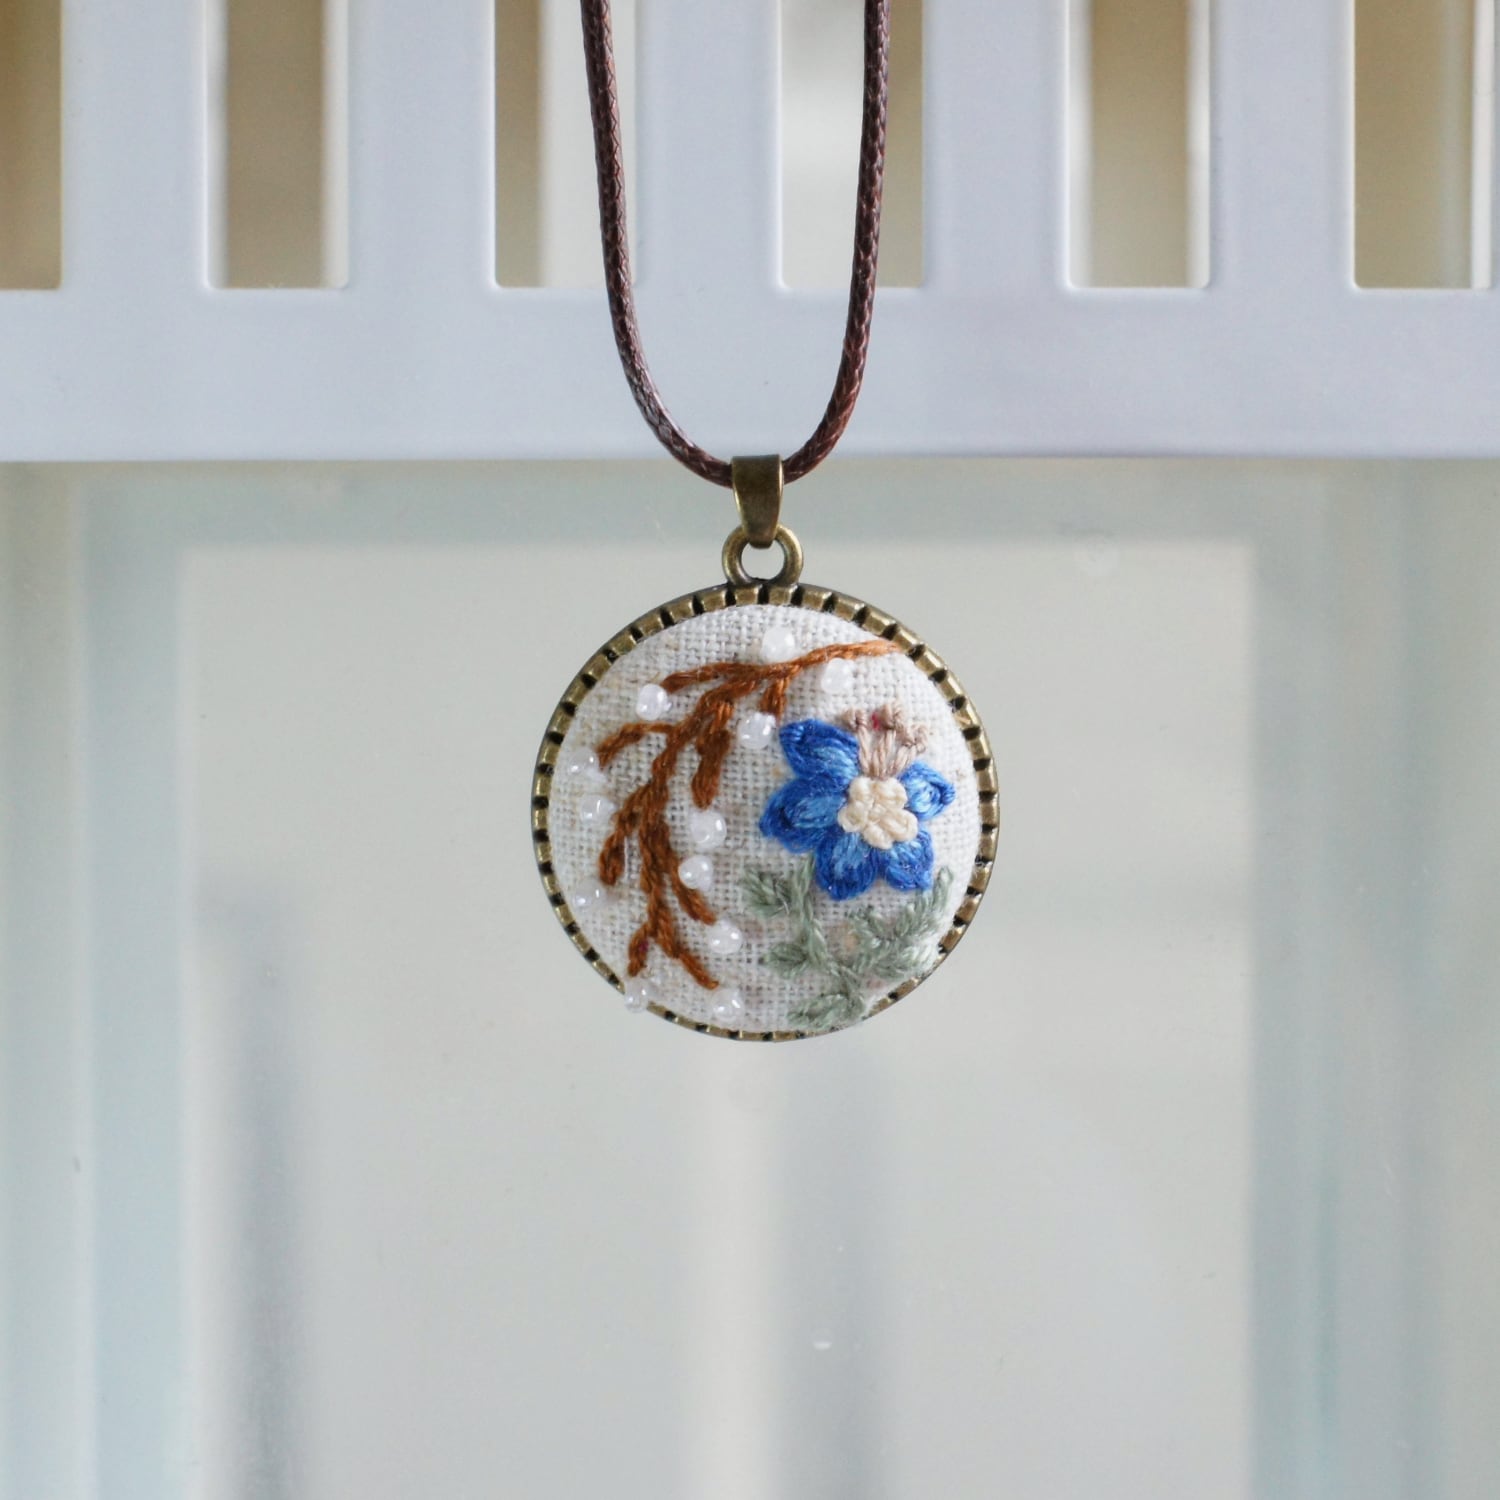 Handmade Mongoram and Personalized Necklaces - goimagine